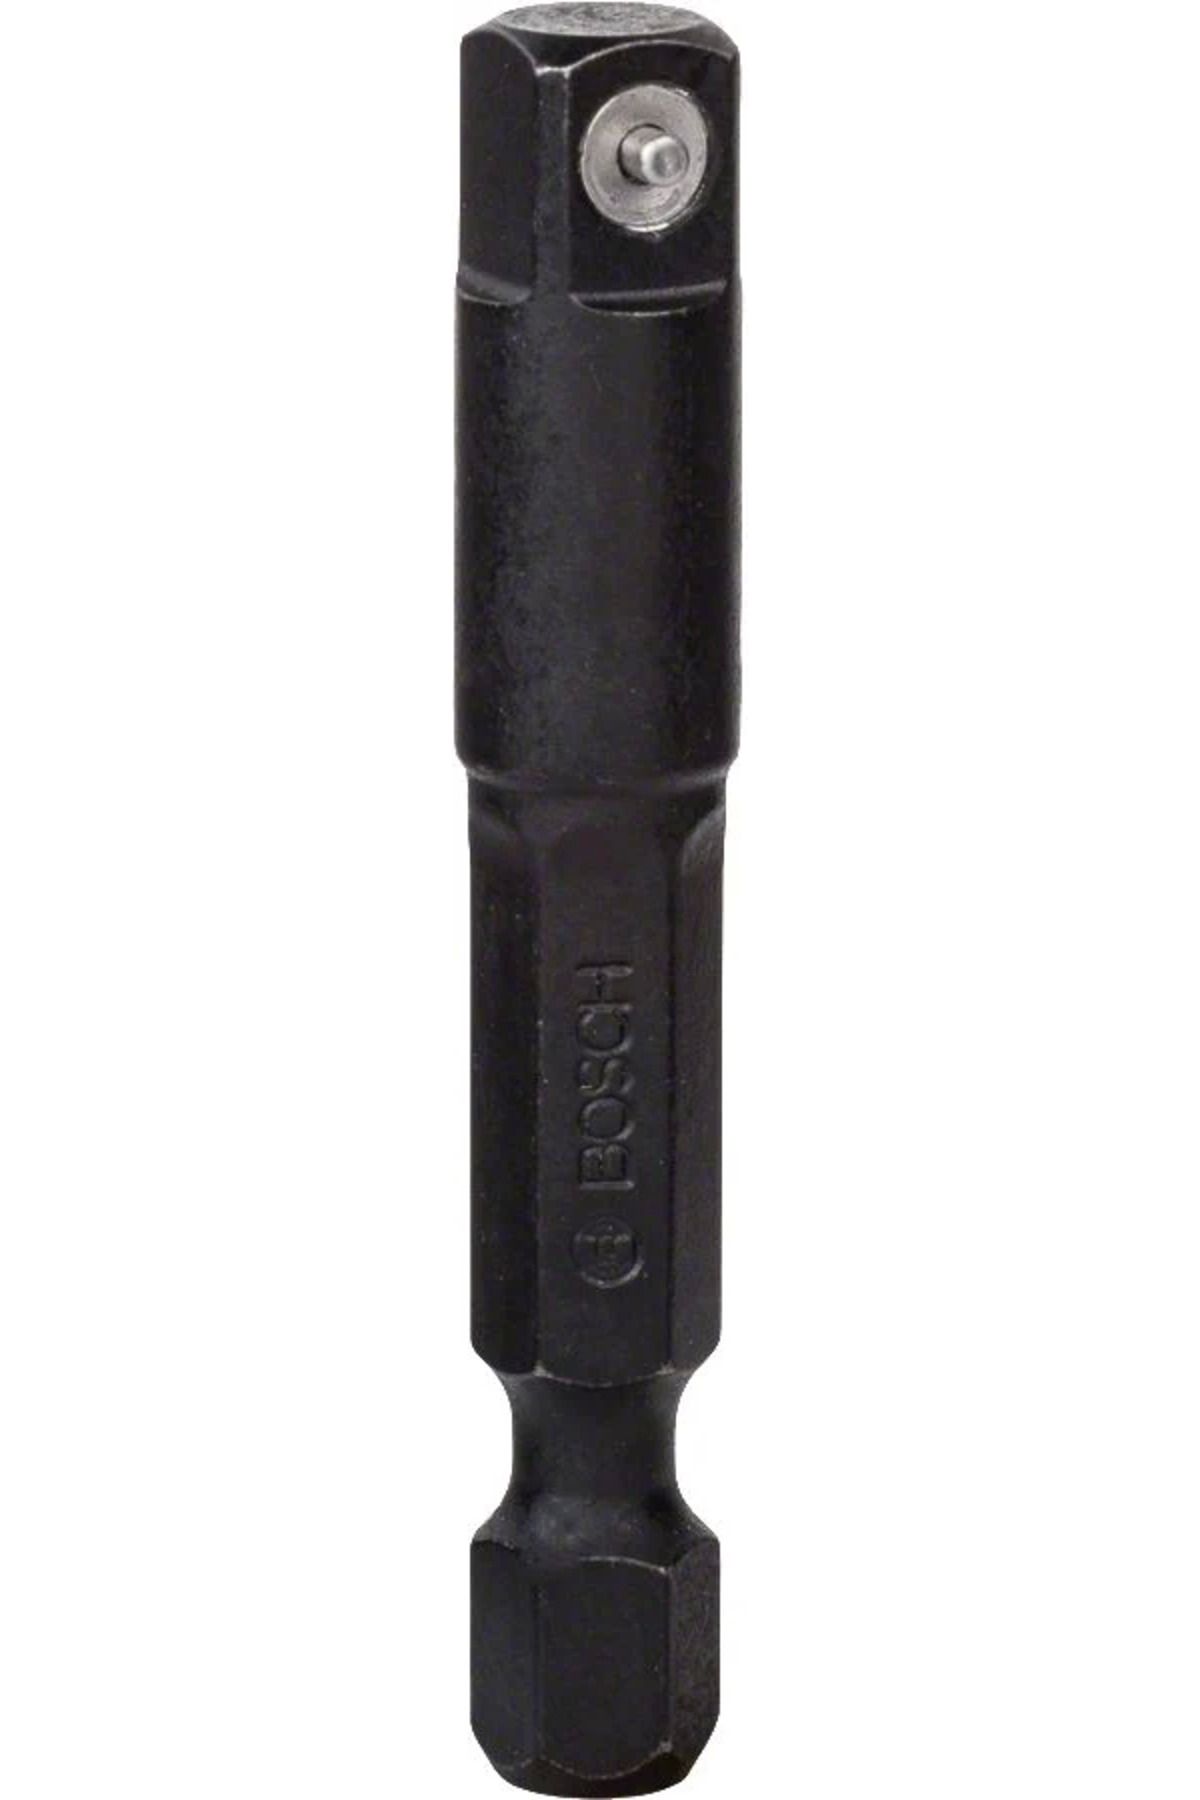 Bosch Lokma Ucu Adaptörü Impact Control 1/4 Inç Soket - 2608551109